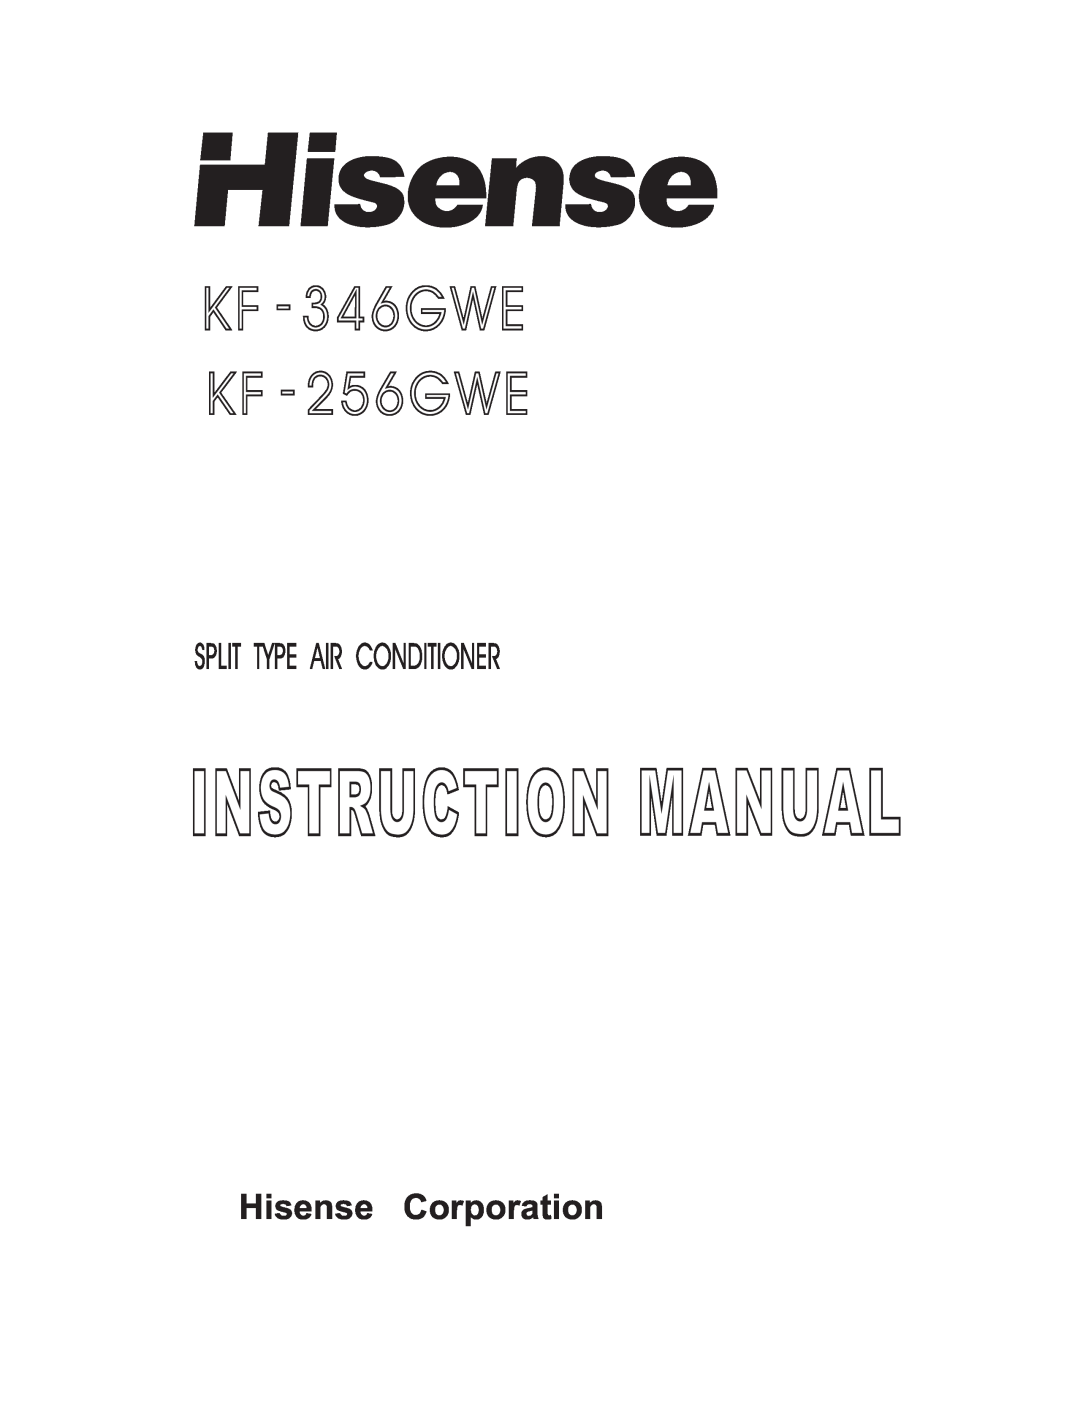 Hisense Group KF 346GWE instruction manual Instruction Manual, KF - 346GWE, KF - 256GWE, Split Type Air Conditioner 